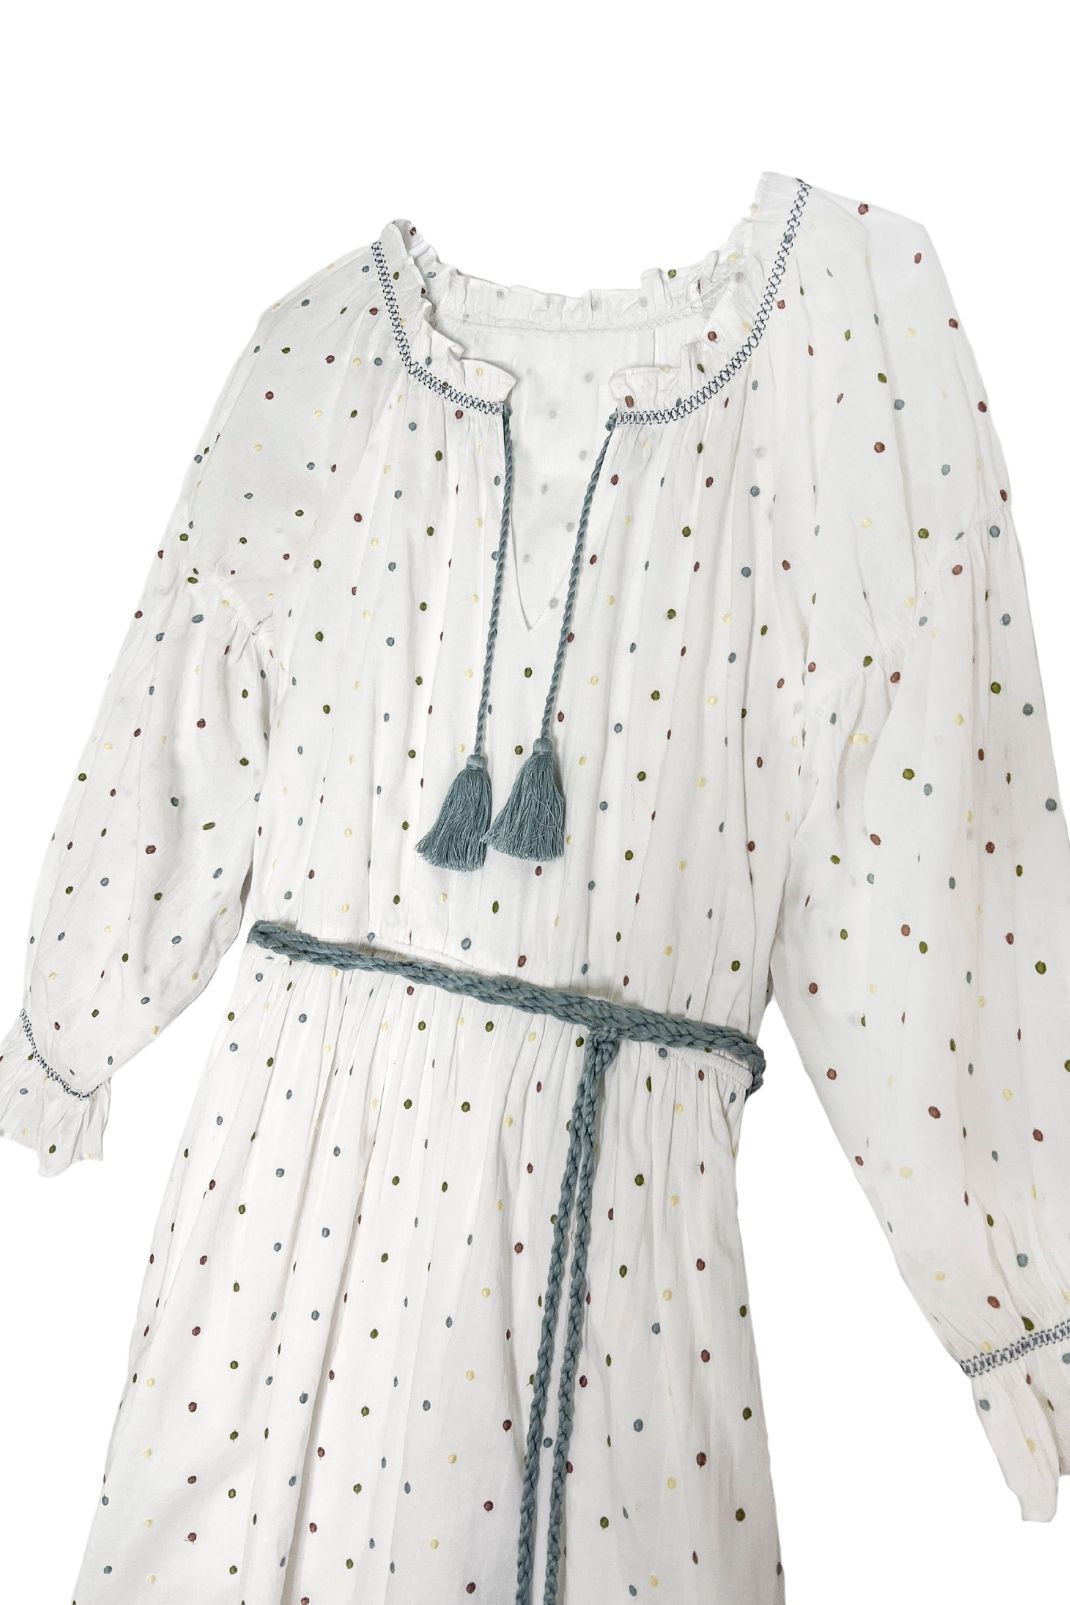 Close up product shot of women's long sleeve confetti dot printed dress